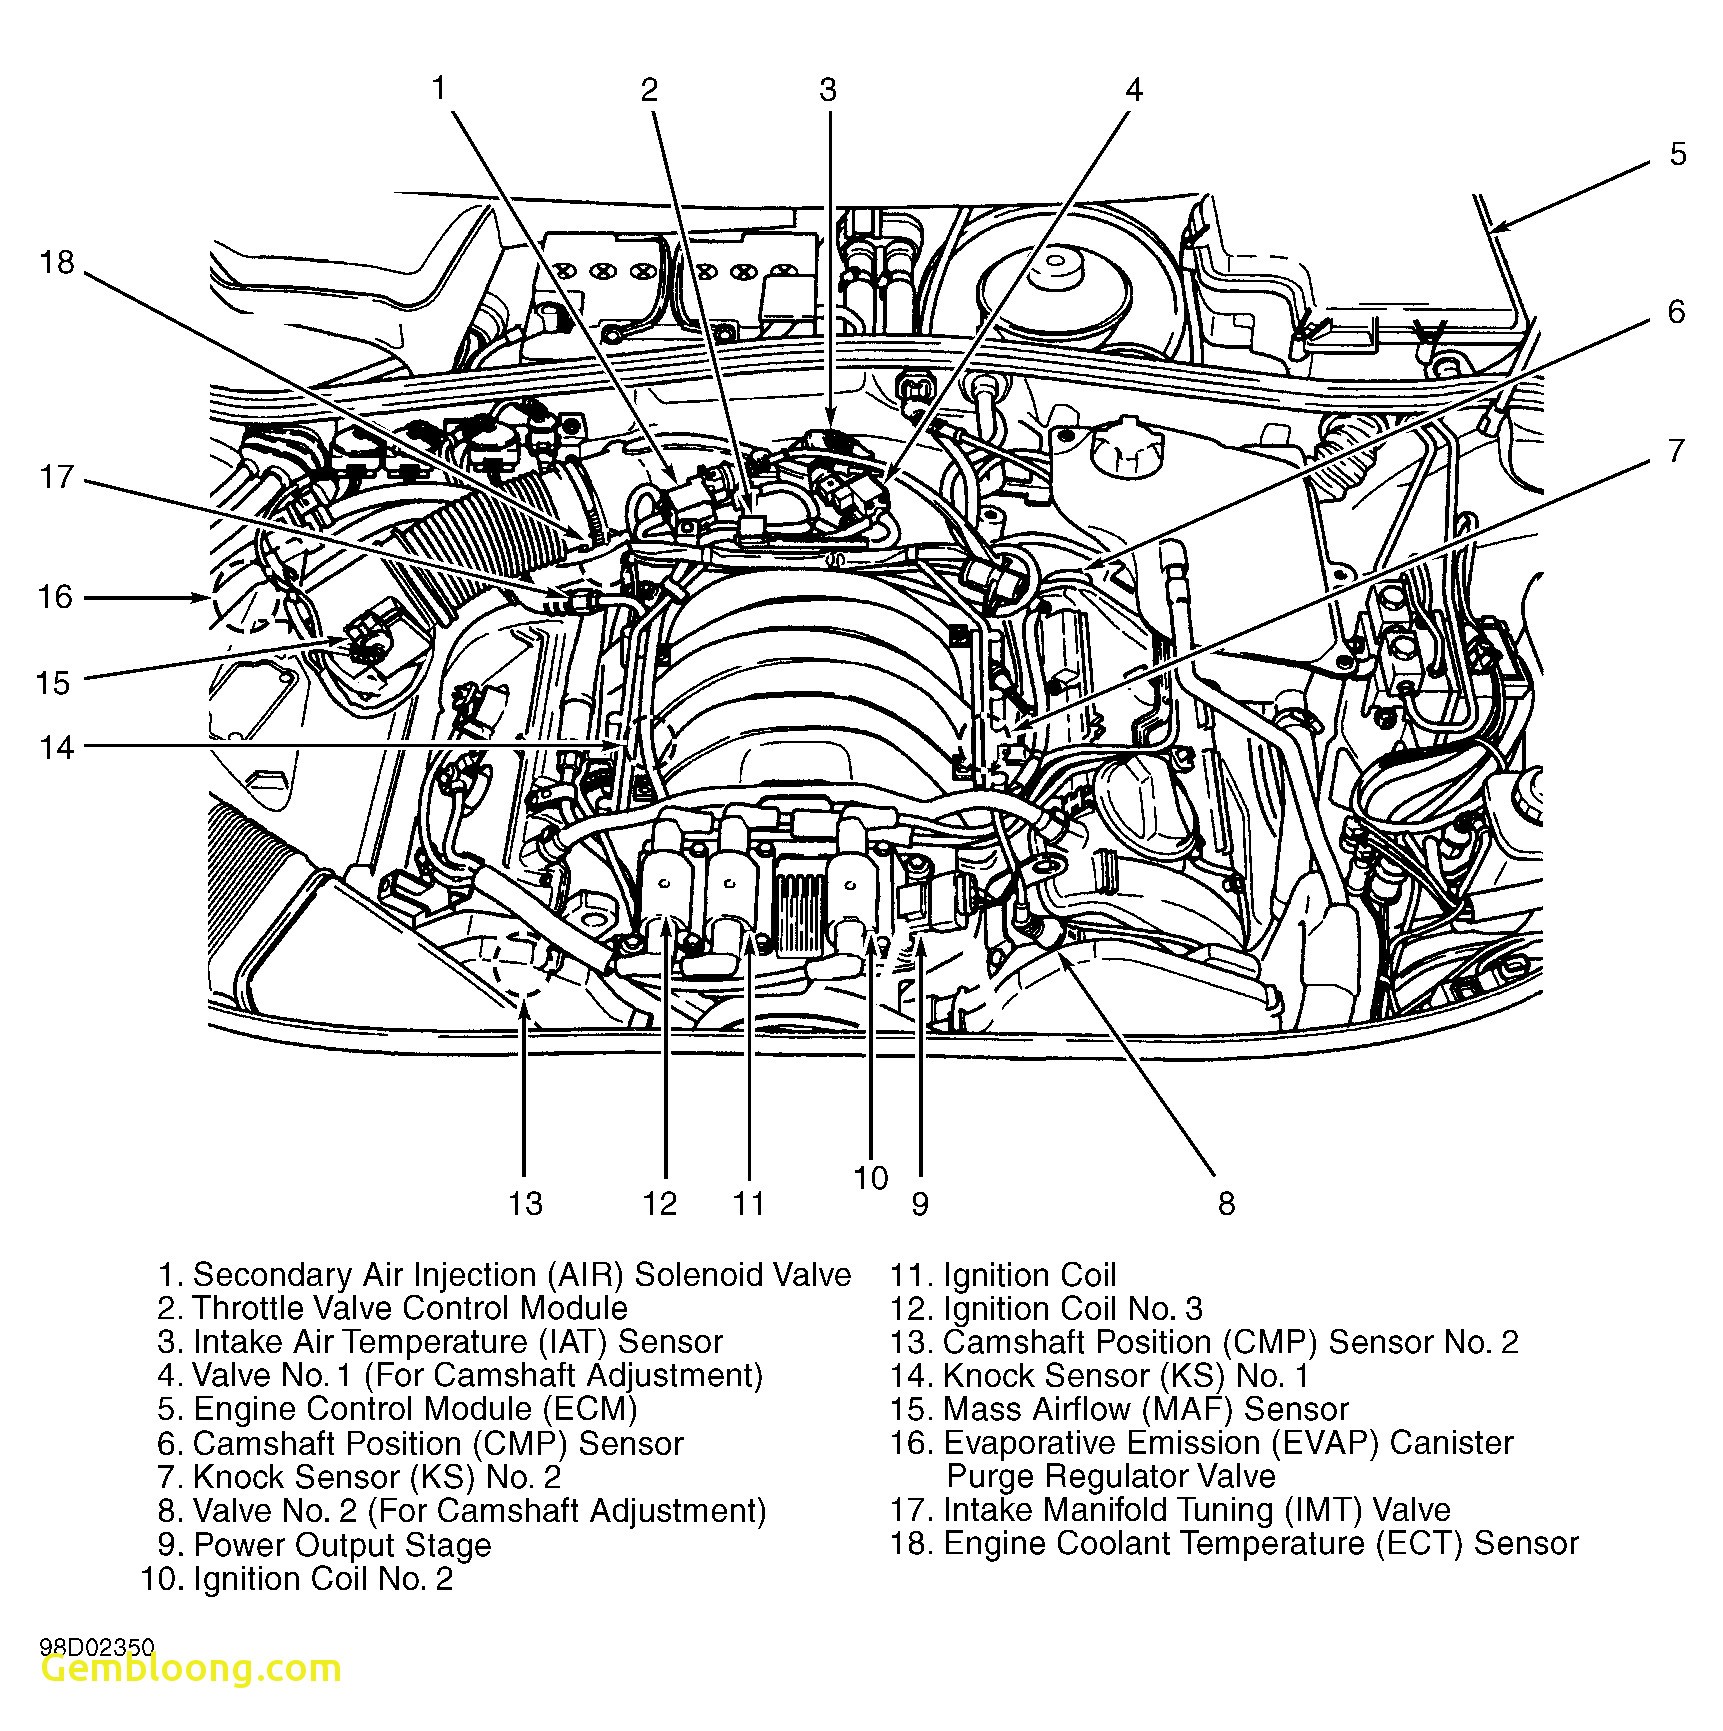 1999 Chevy Cavalier Engine Diagram 1999mitsubishieclipseenginediagram Remove Engine Mount Not Shown Of 1999 Chevy Cavalier Engine Diagram